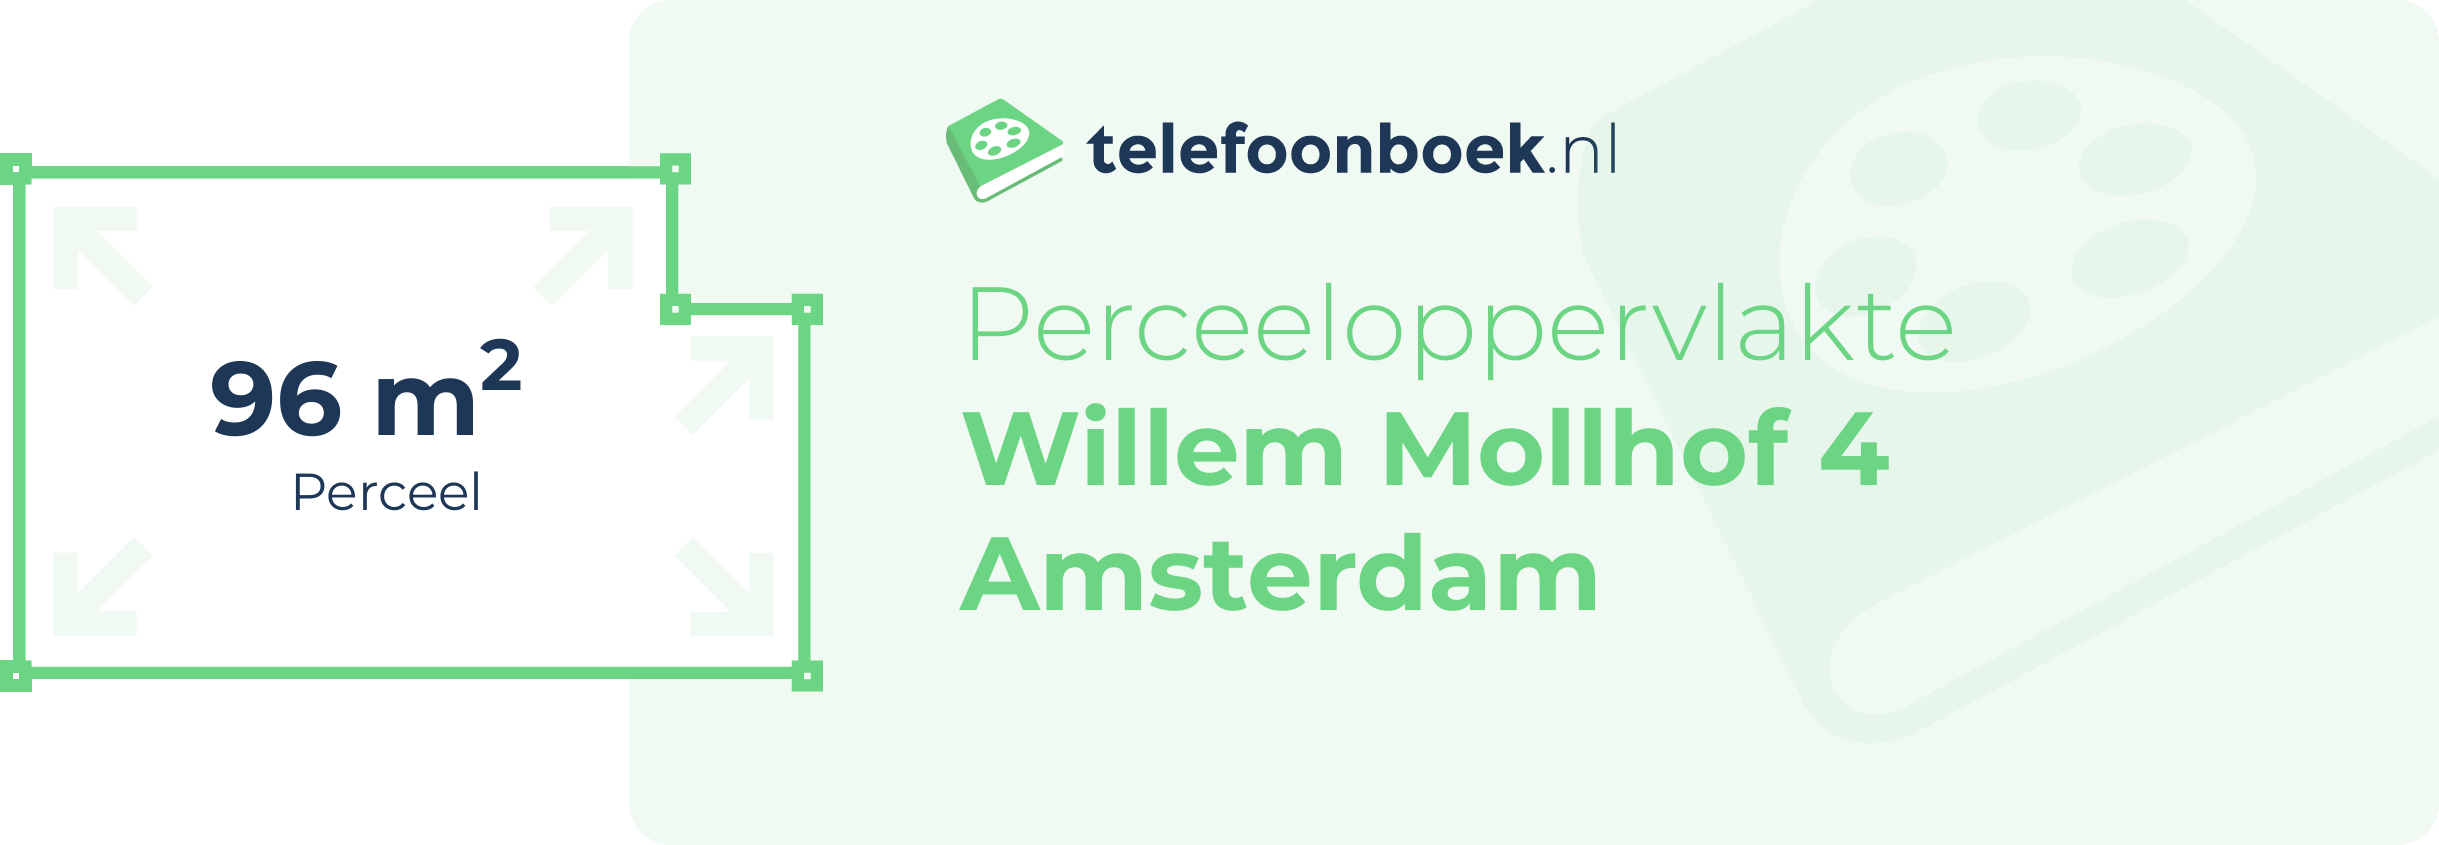 Perceeloppervlakte Willem Mollhof 4 Amsterdam